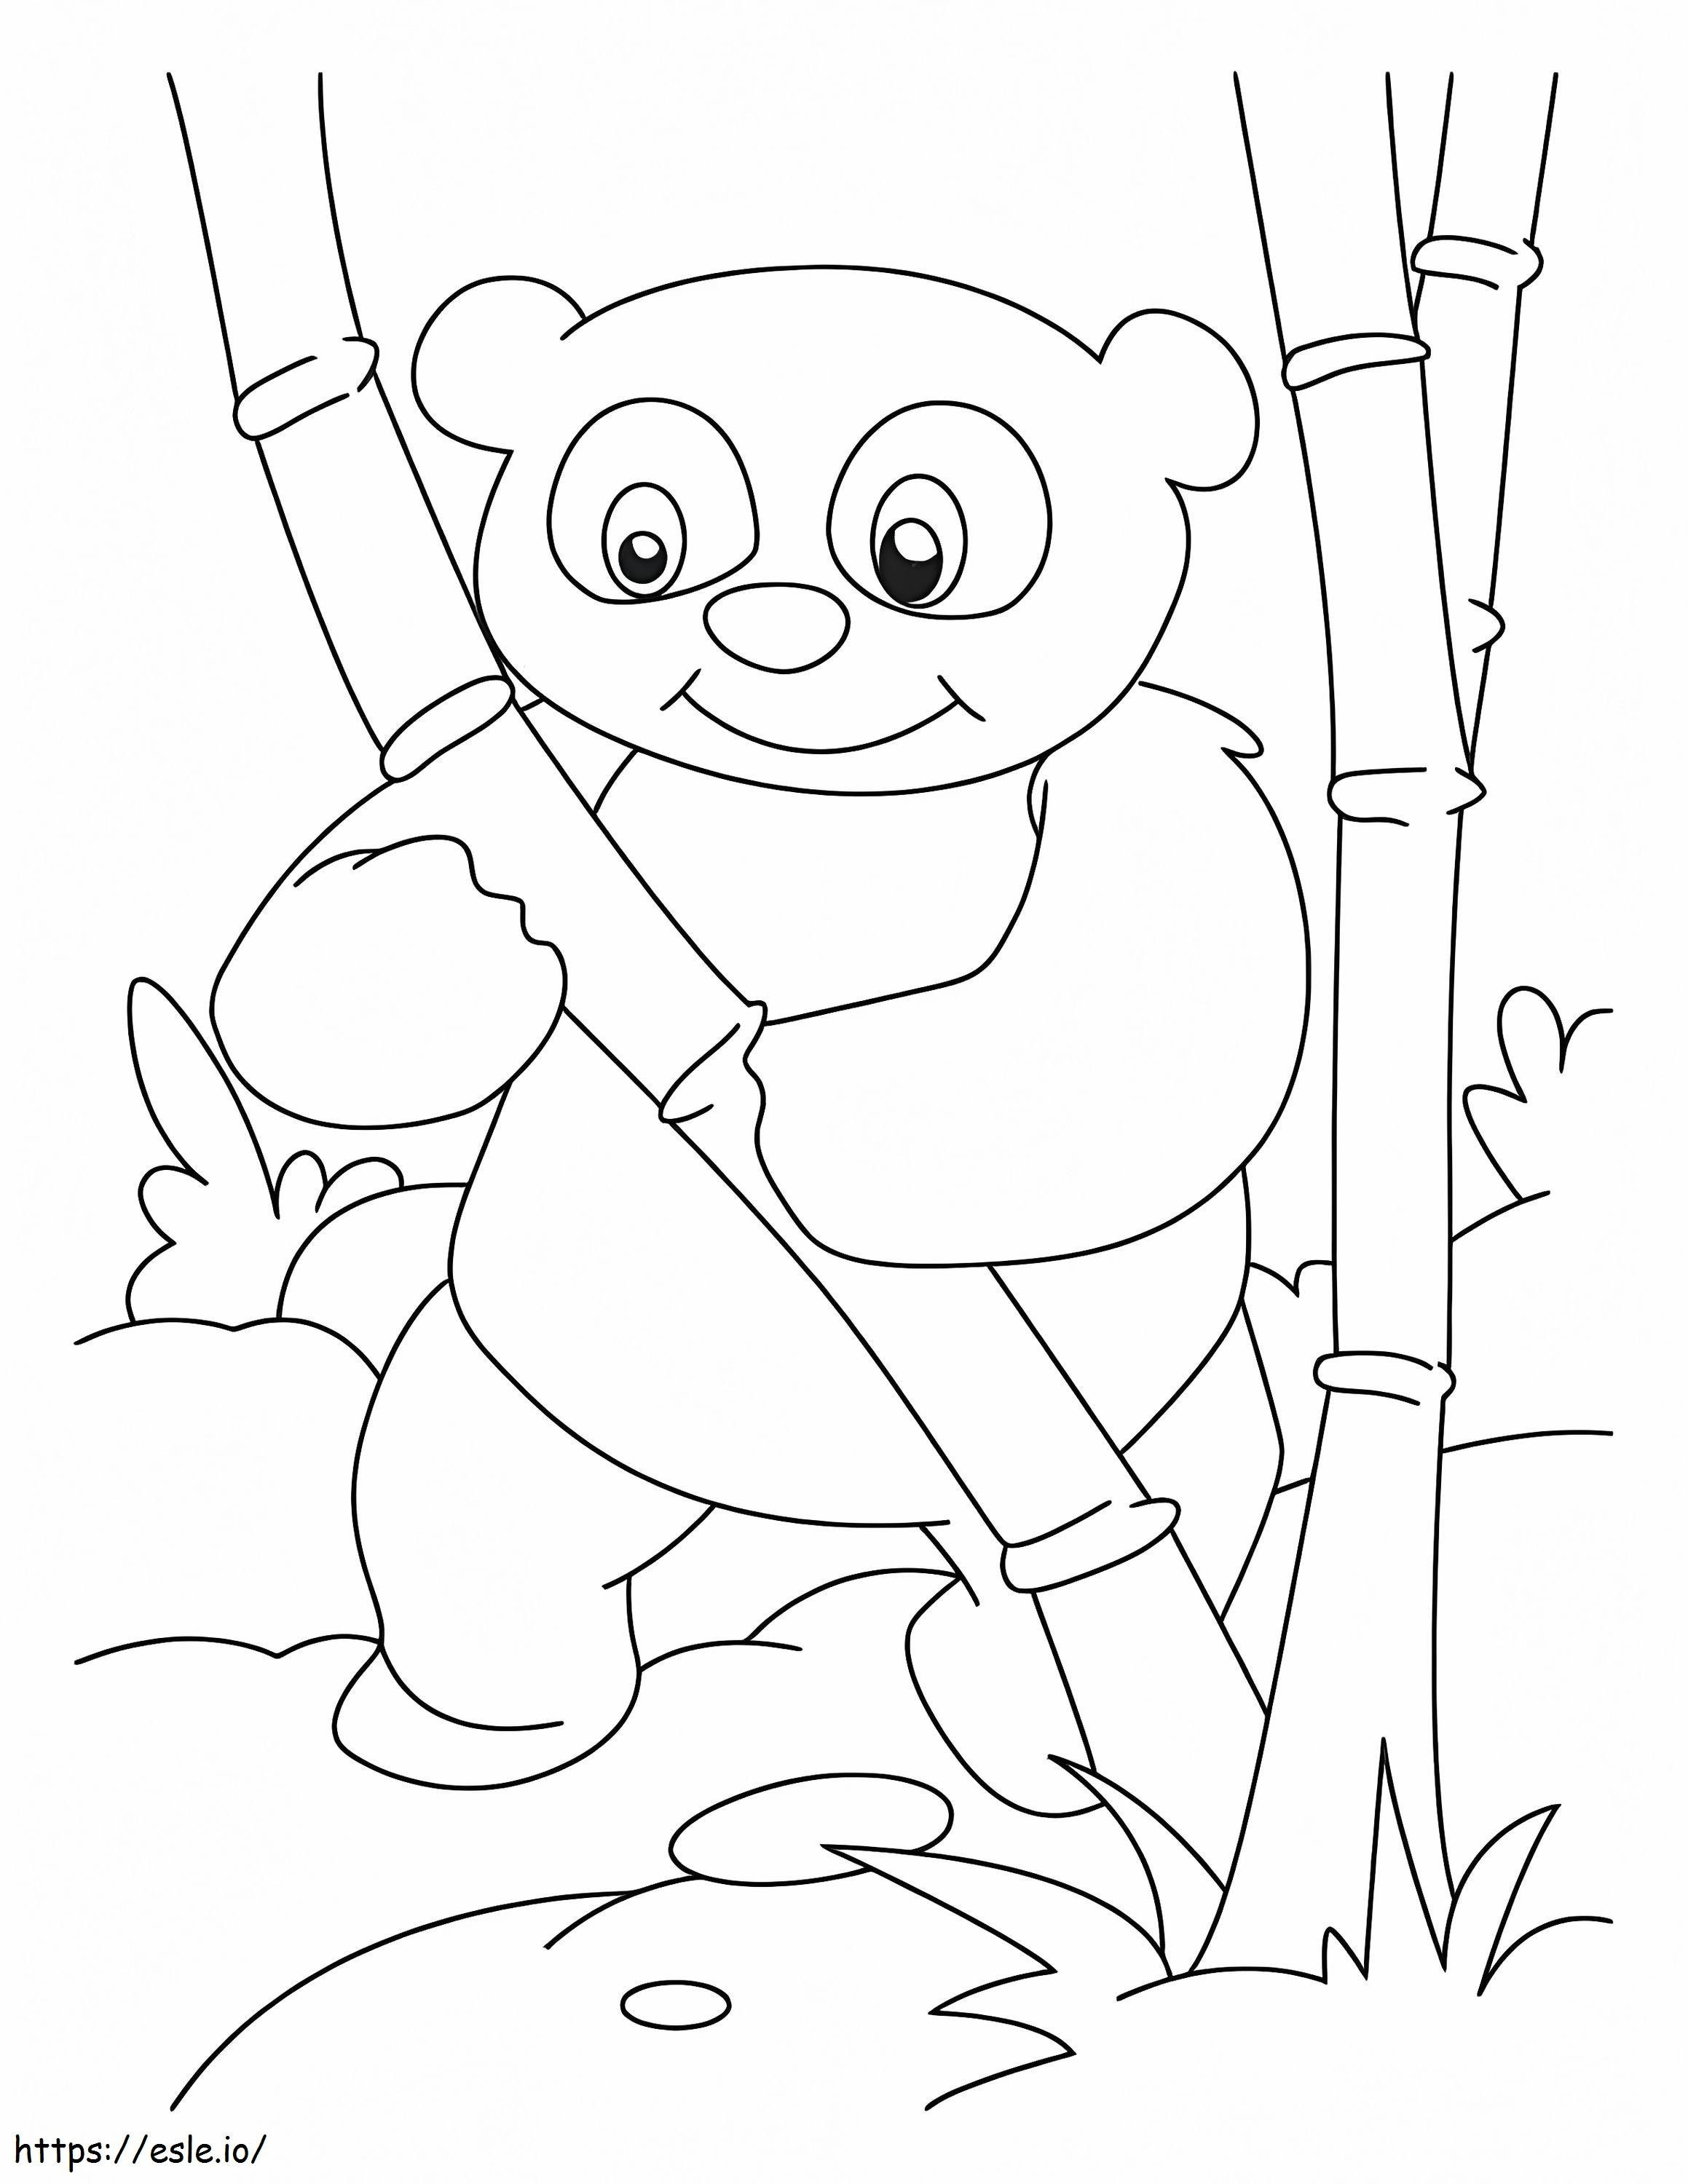 Panda sorridente com árvore de bambu para colorir